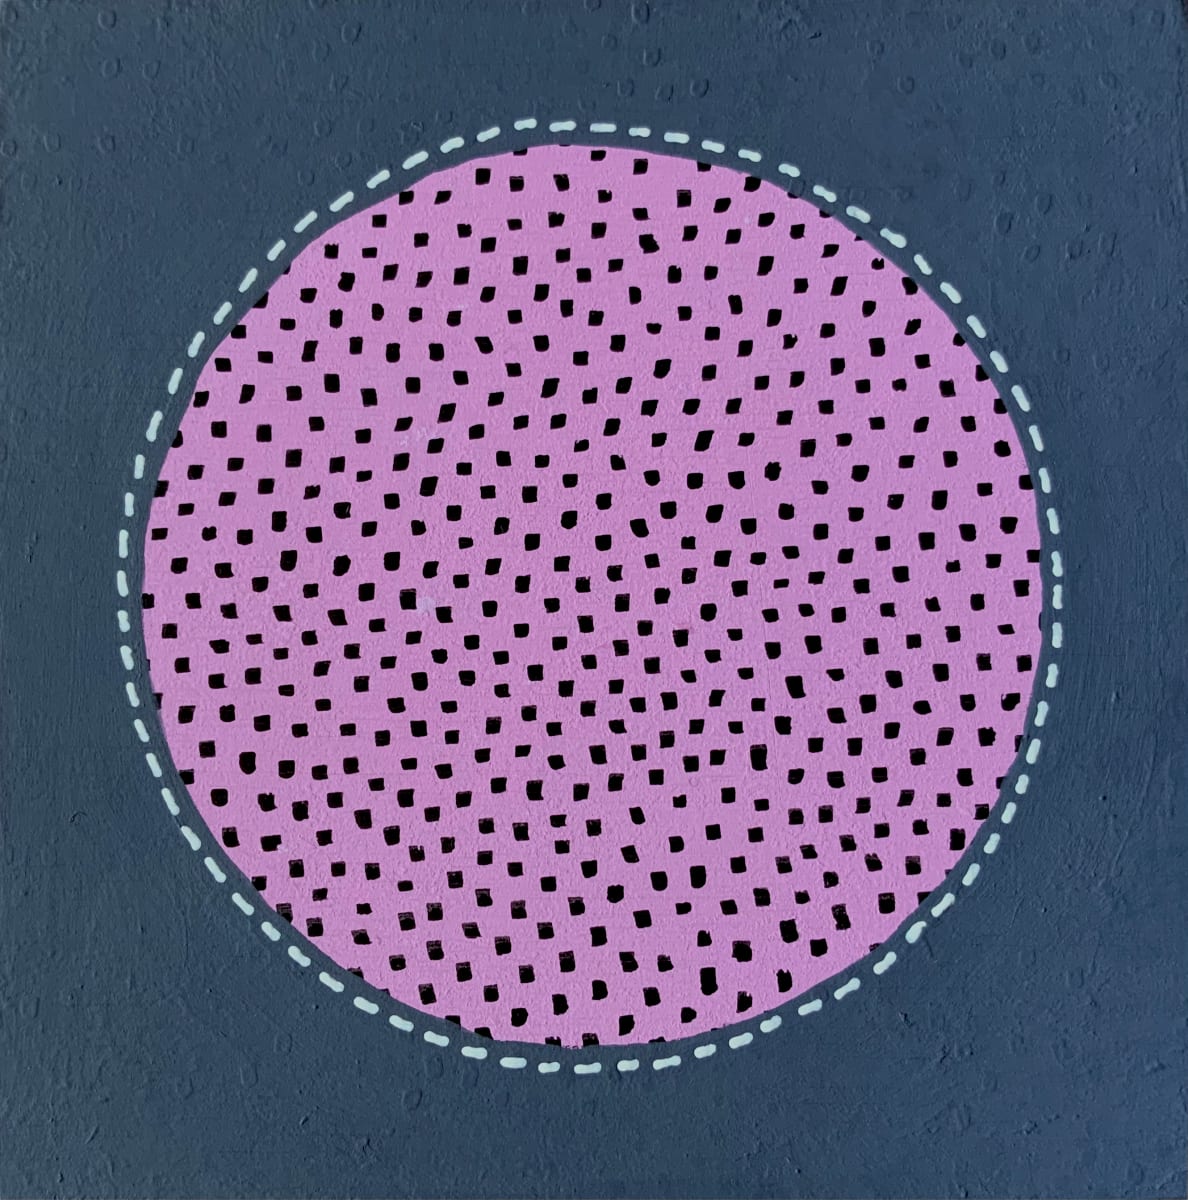 Dots 47, Pink Pattern + Slate by Suzanne Gibbs  Image: Dots 47, Pink Pattern + Slate Painting